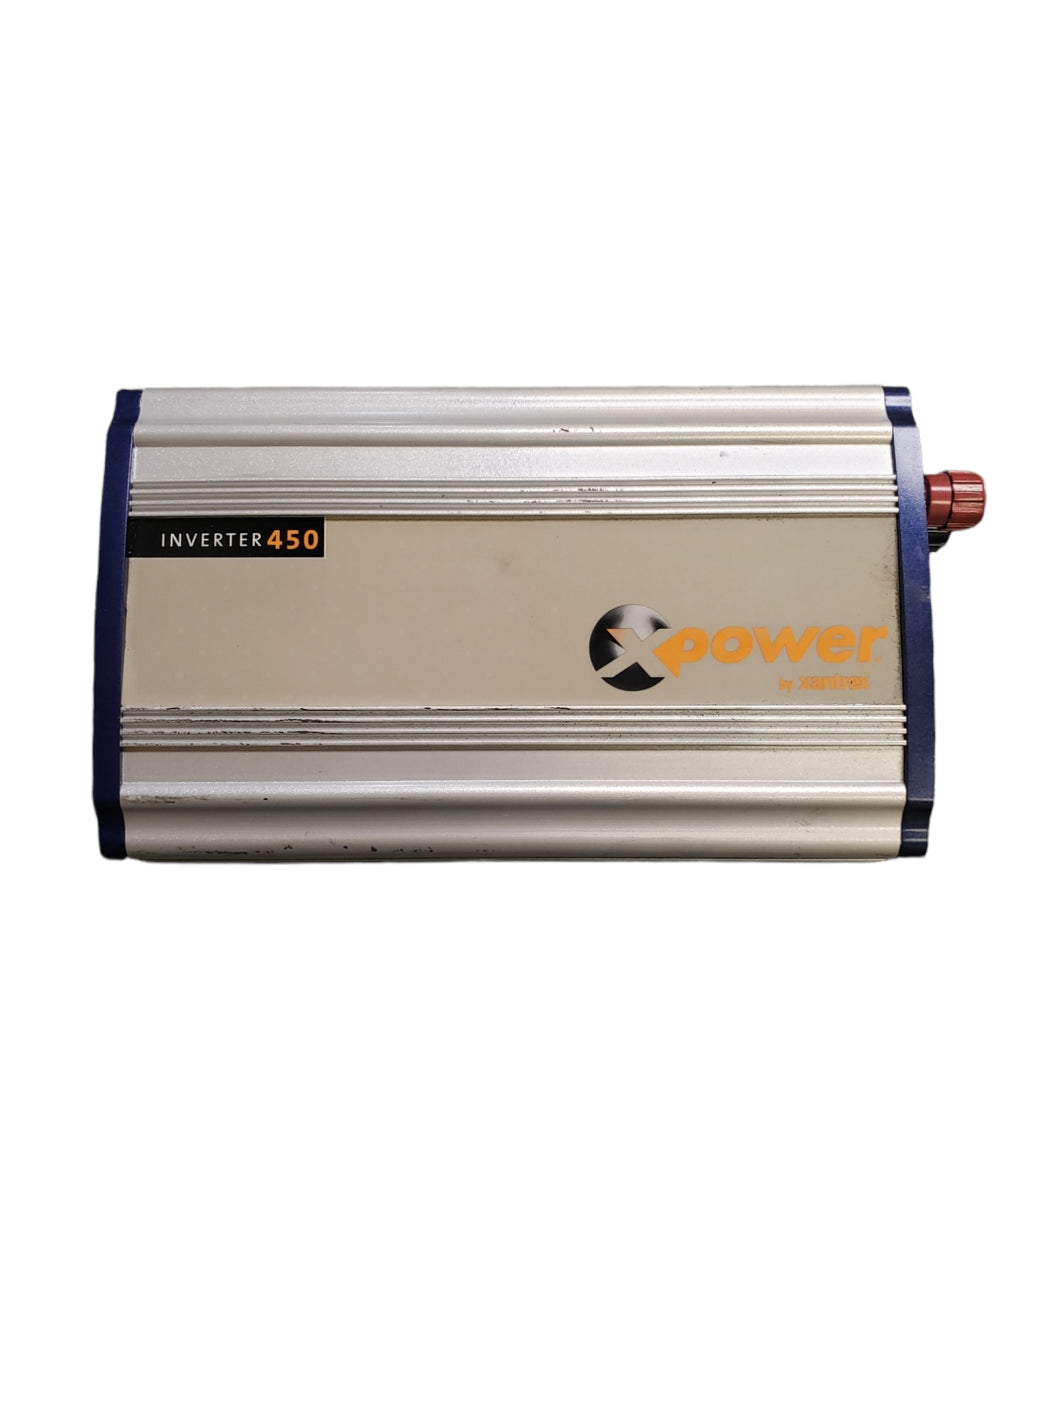 Xantrex Xpower 450 Micro Inverter - NEW/NO BOX - FreemanLiquidators - [product_description]